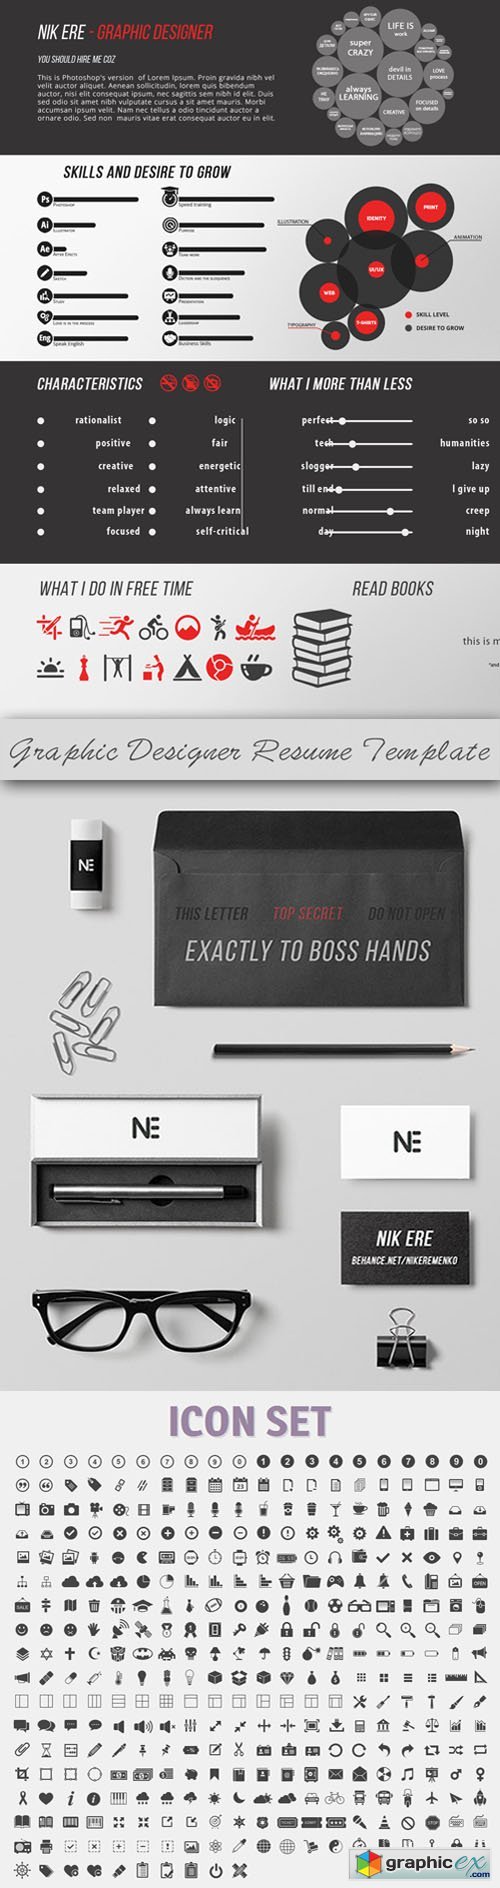 Graphic Designer Resume PSD Template